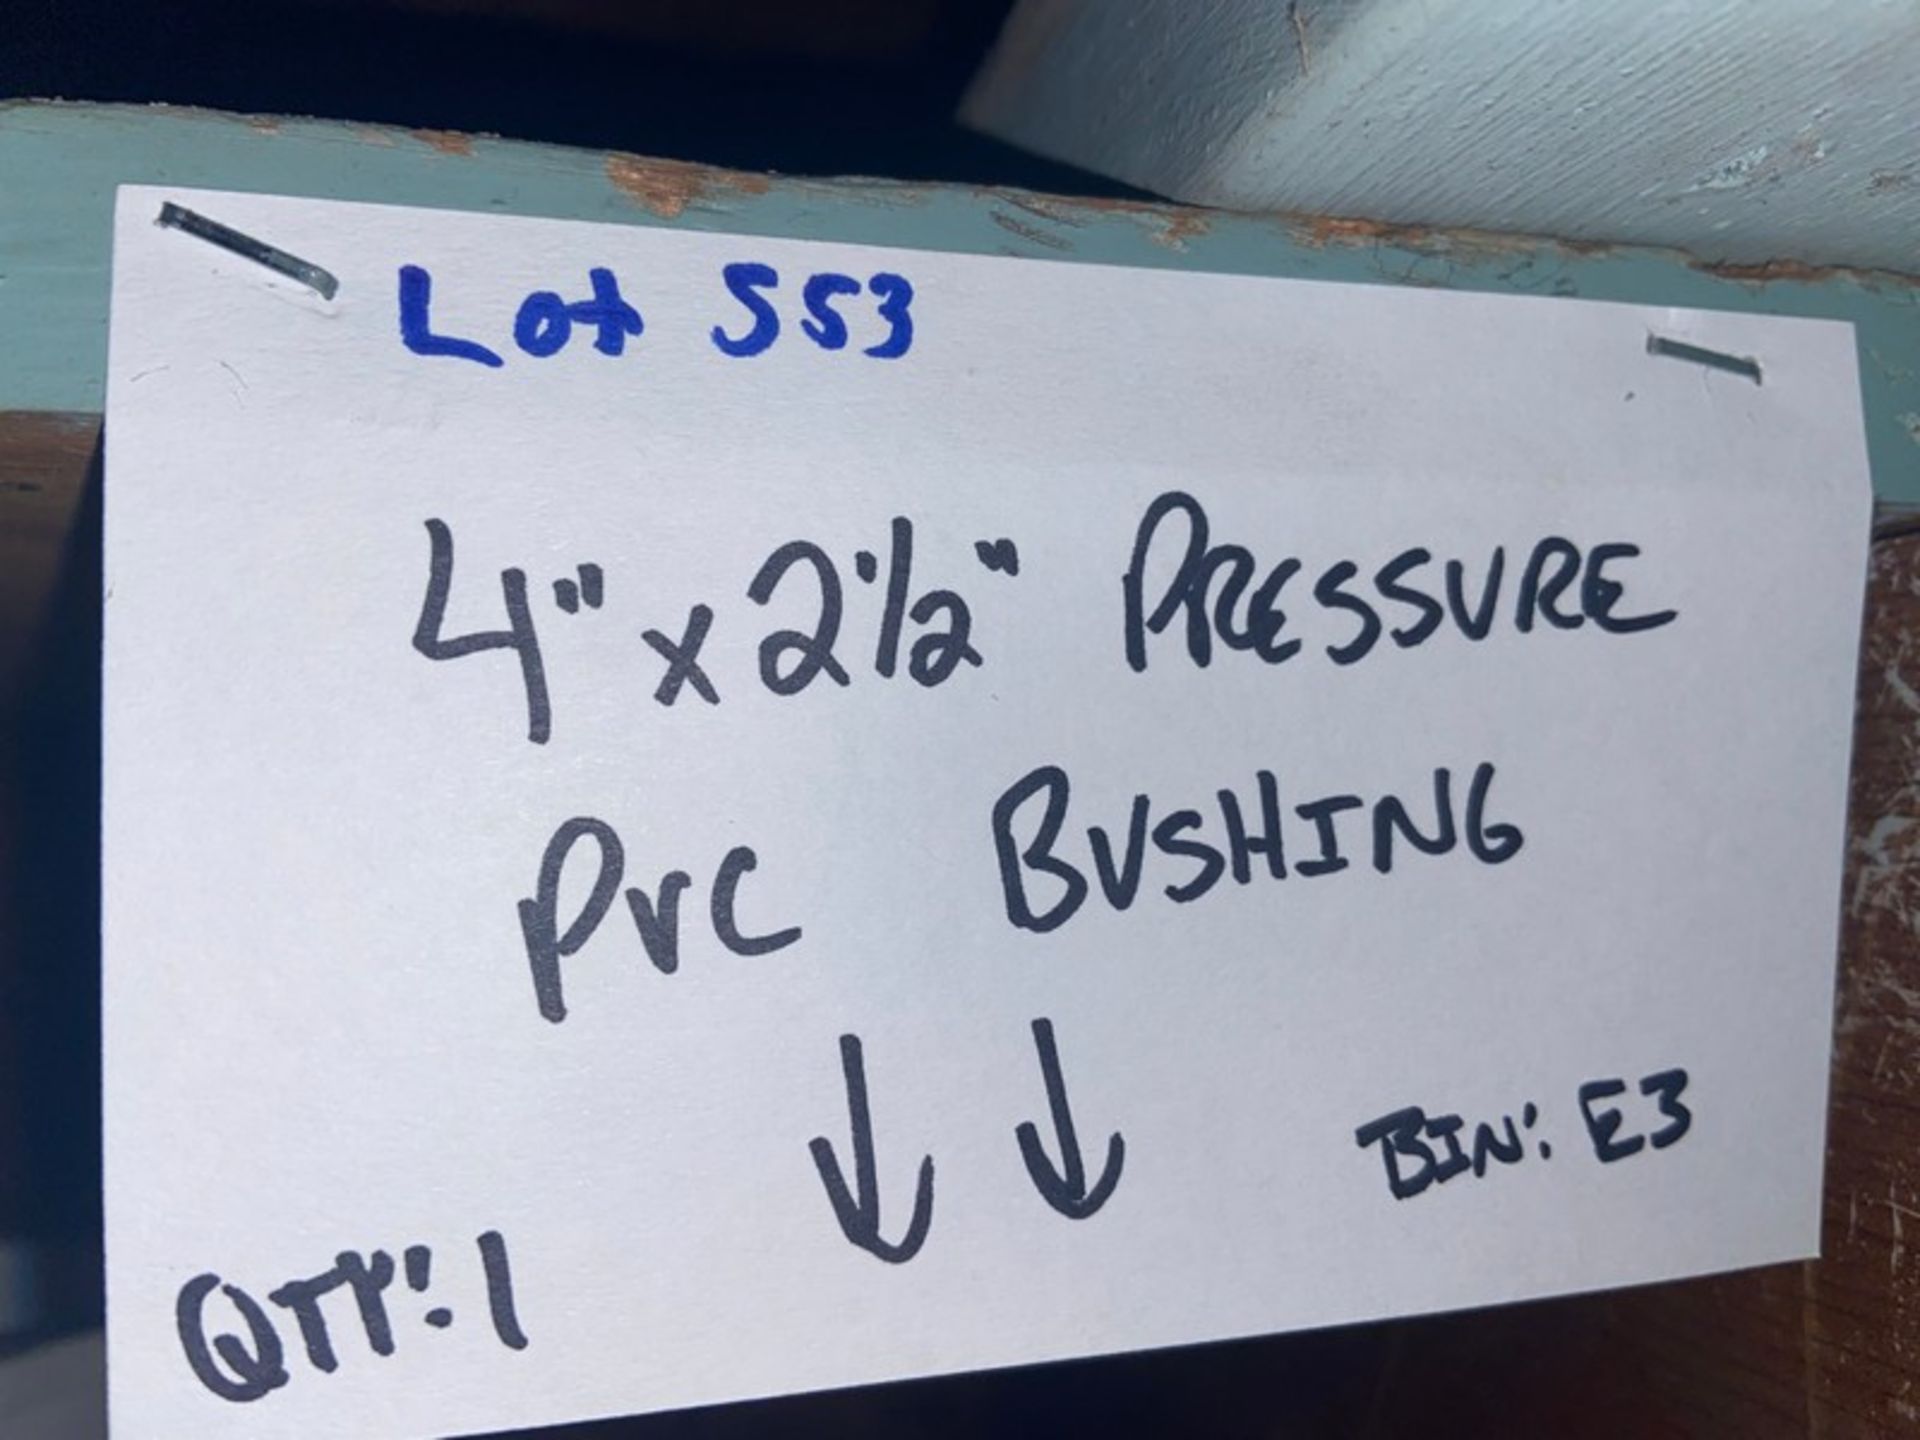 (1) 4” x 2 1/2” Pressure PVC Bushing (Bin:E3); (7) 3”x 2 2 1/2” Pressure PVC Bushing (Bin:E3); (5) - Image 9 of 17